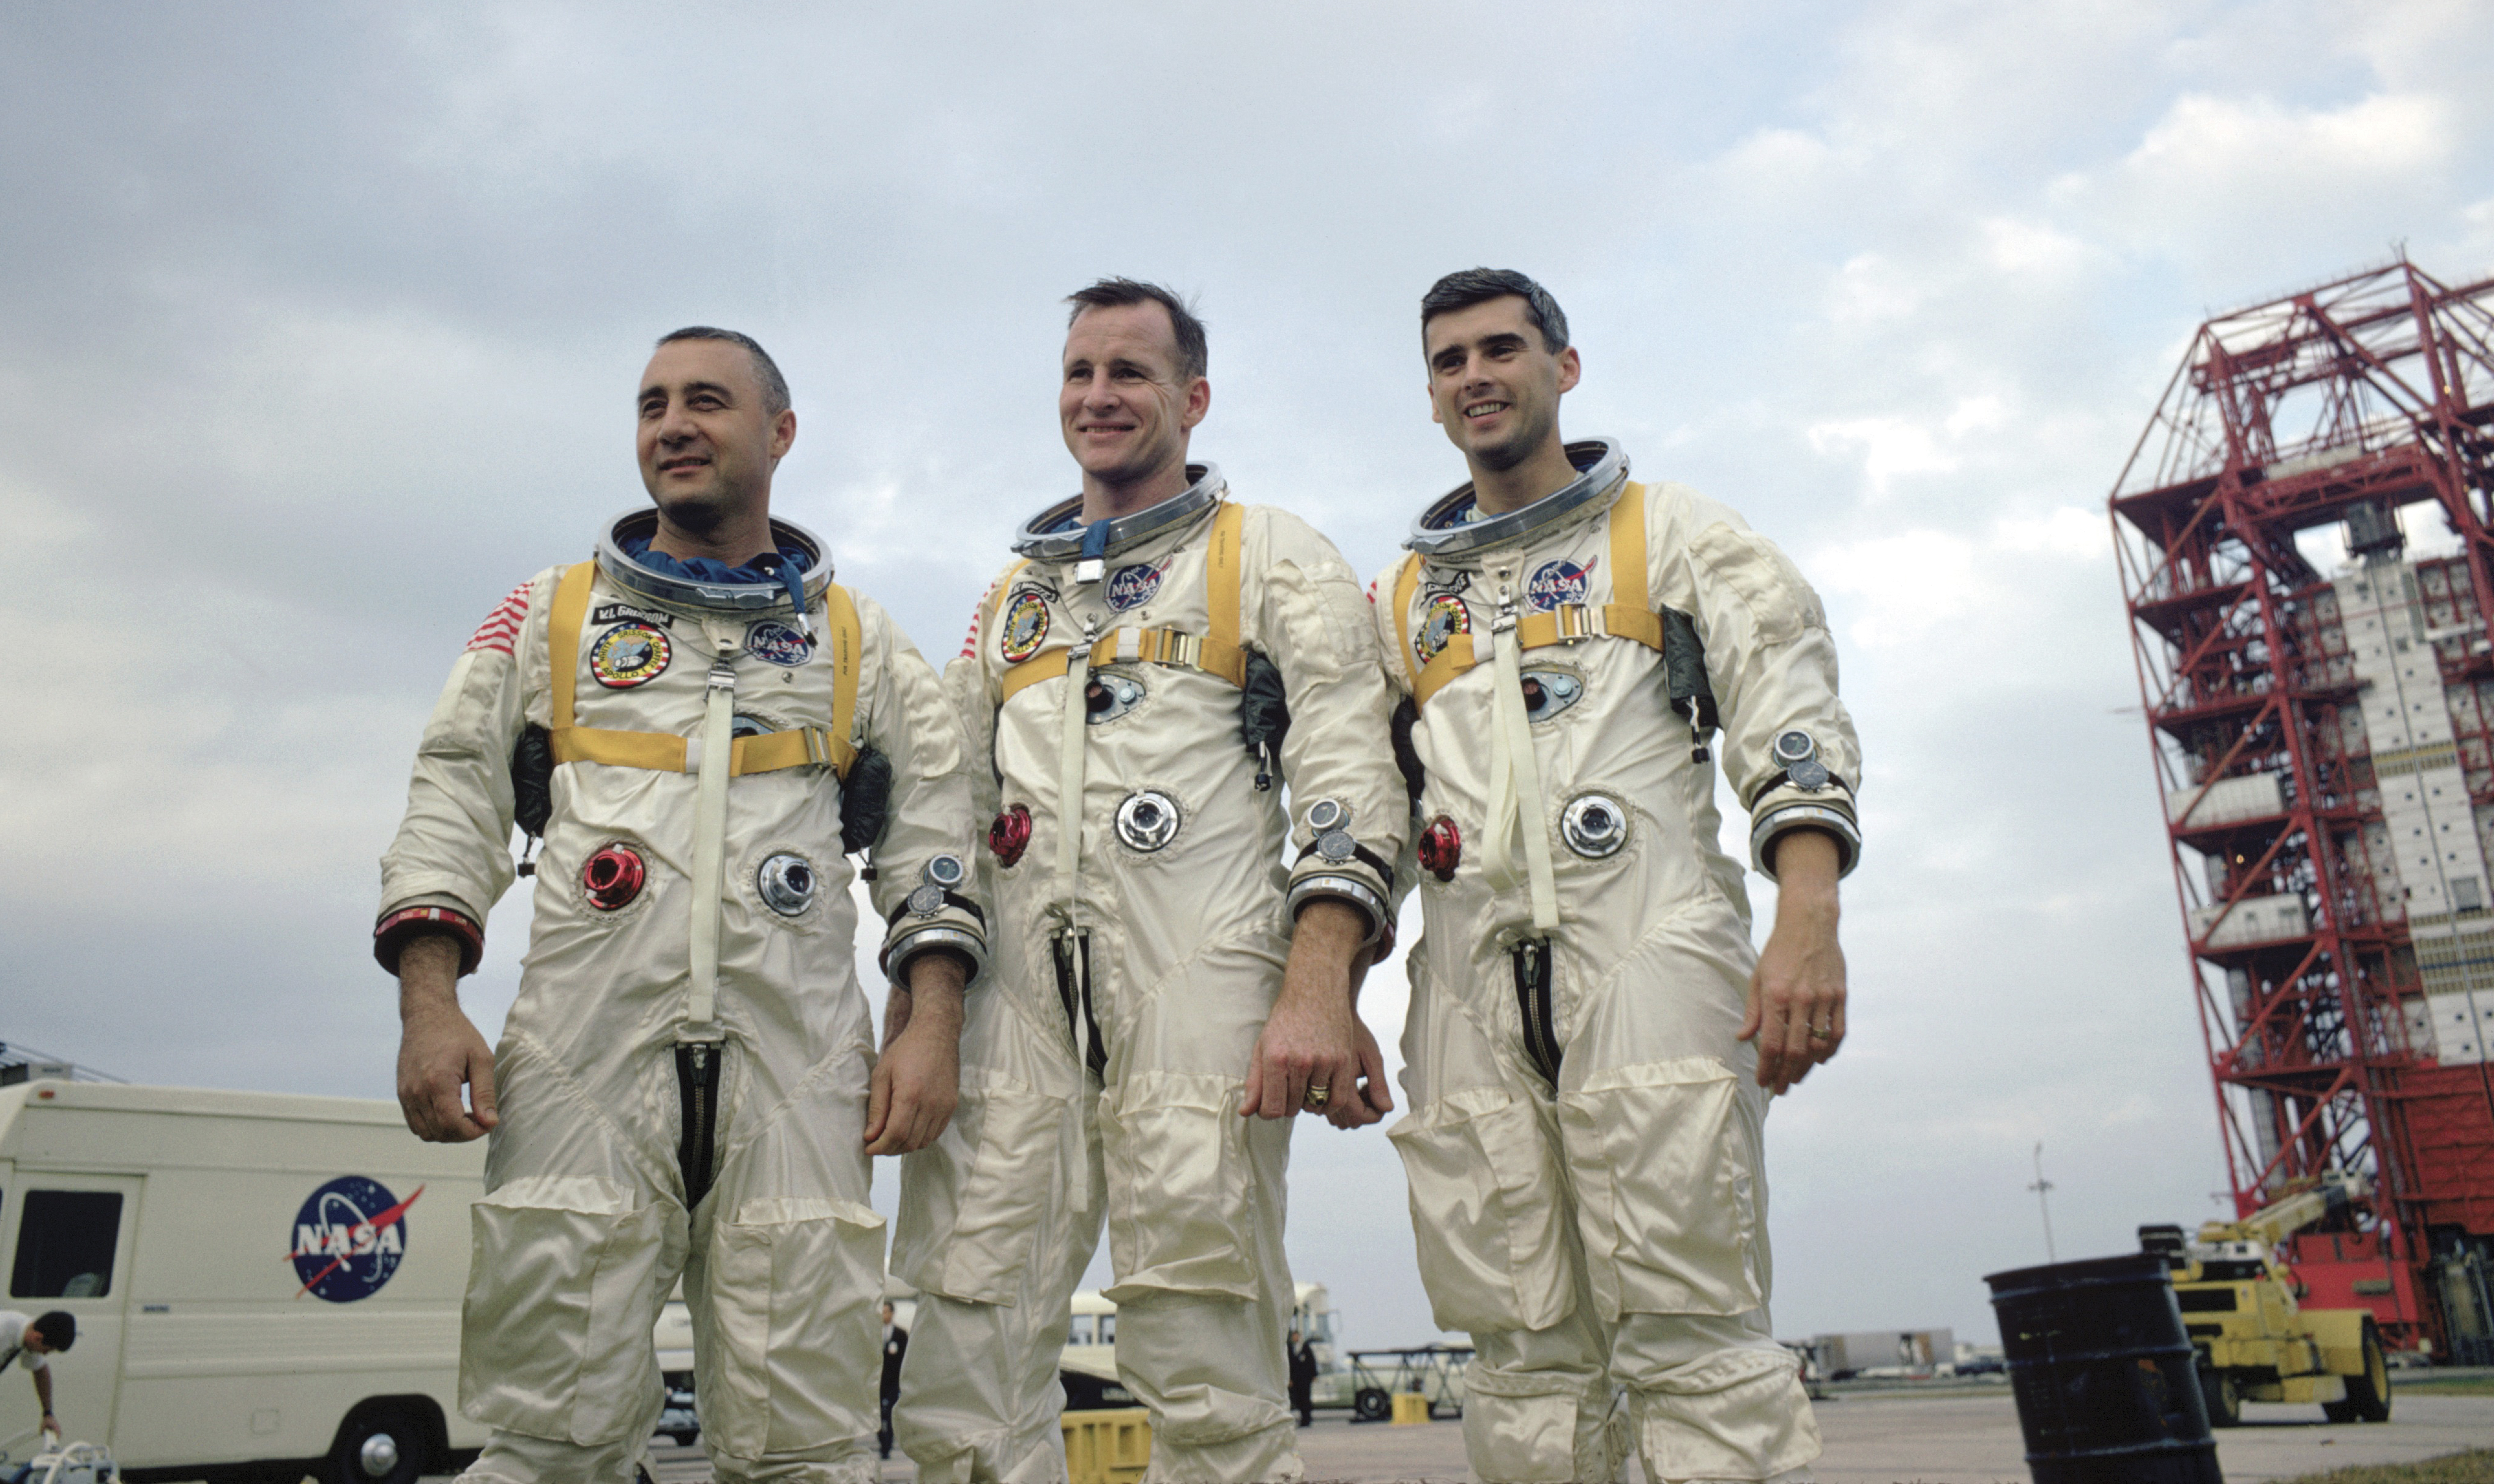 170803_Apollo 1 crew